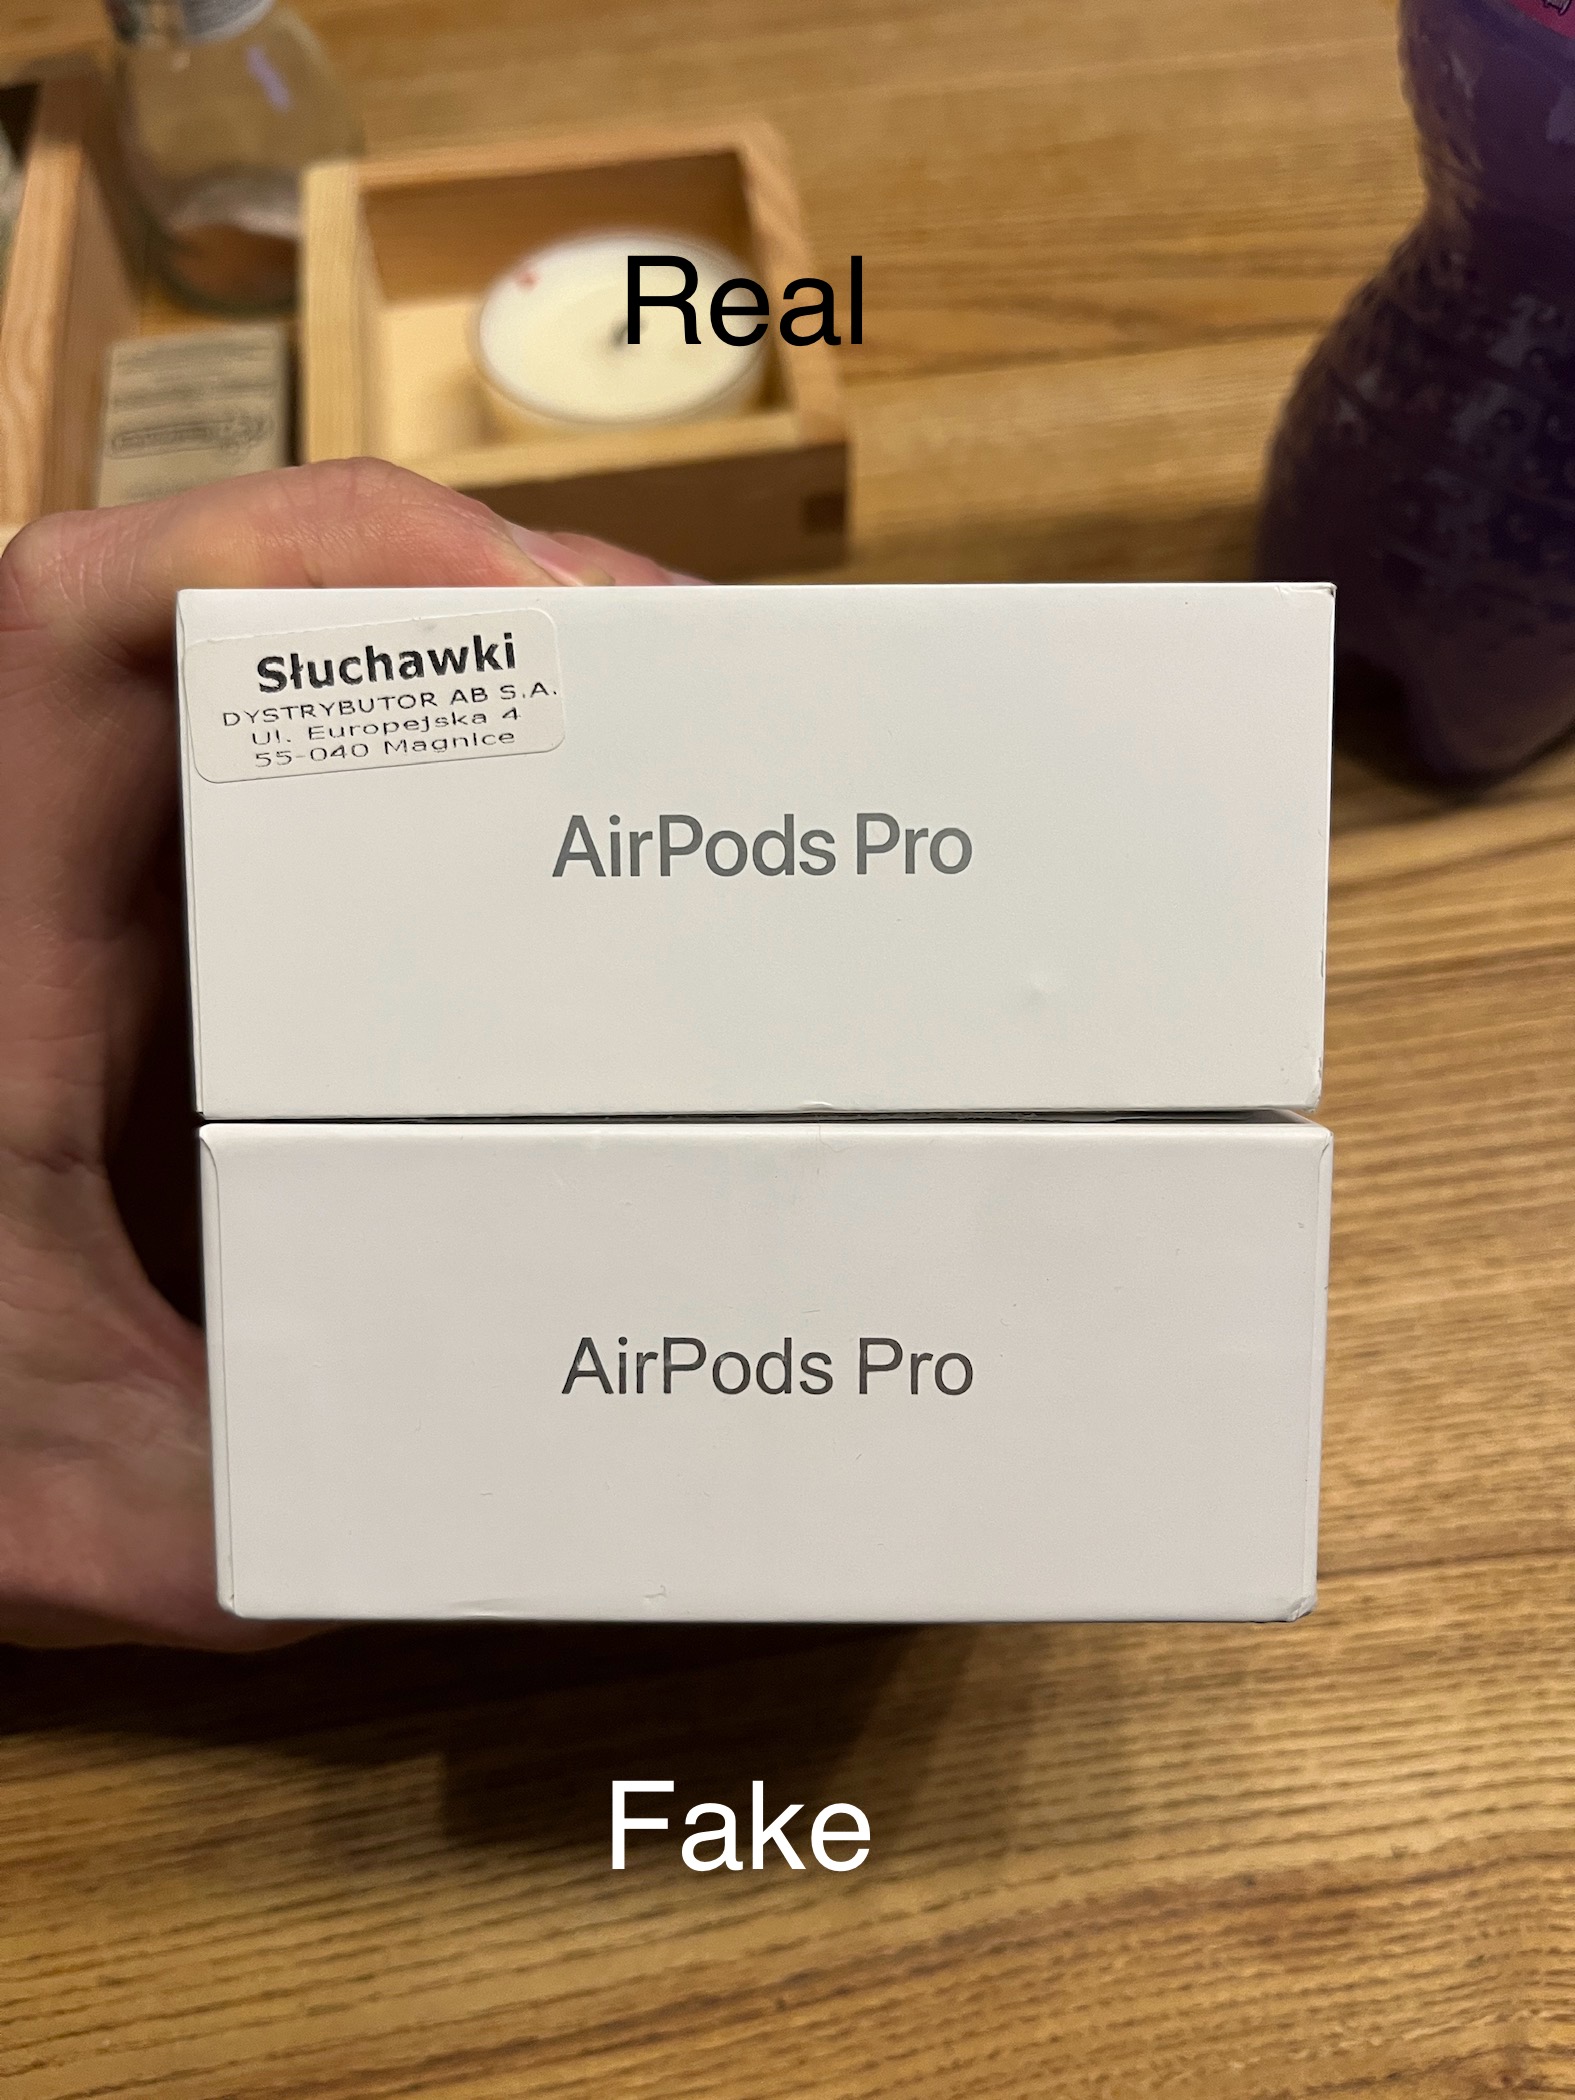 Confirmation on real vs fake : r/Airpodsmax